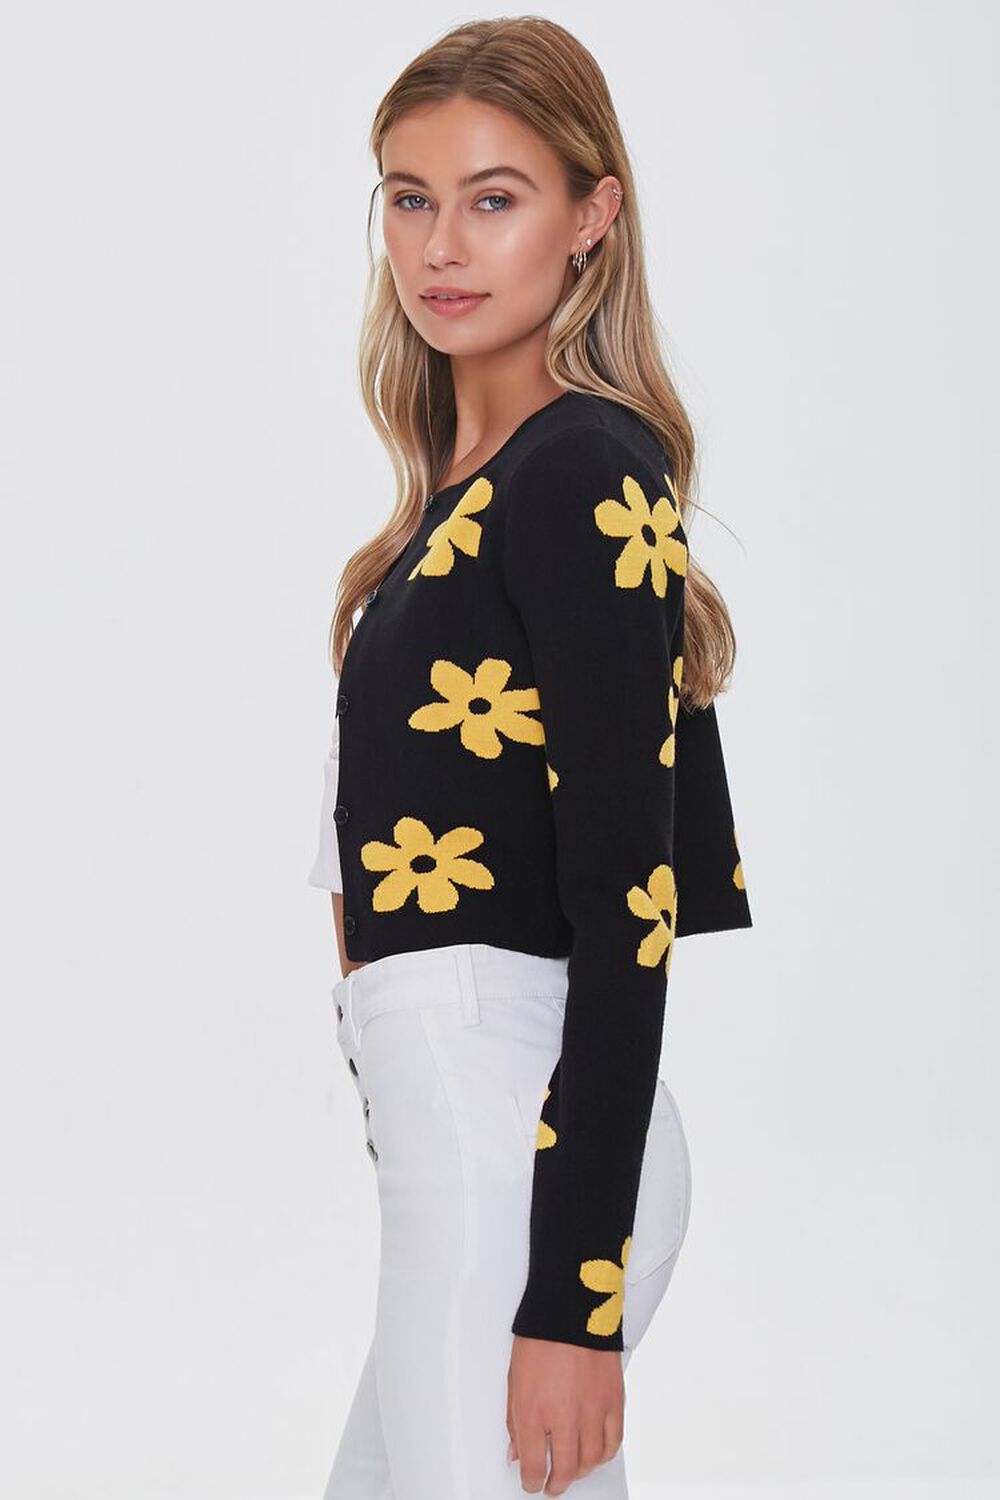 BLACK/YELLOW Daisy Print Buttoned Cardigan Sweater, image 2